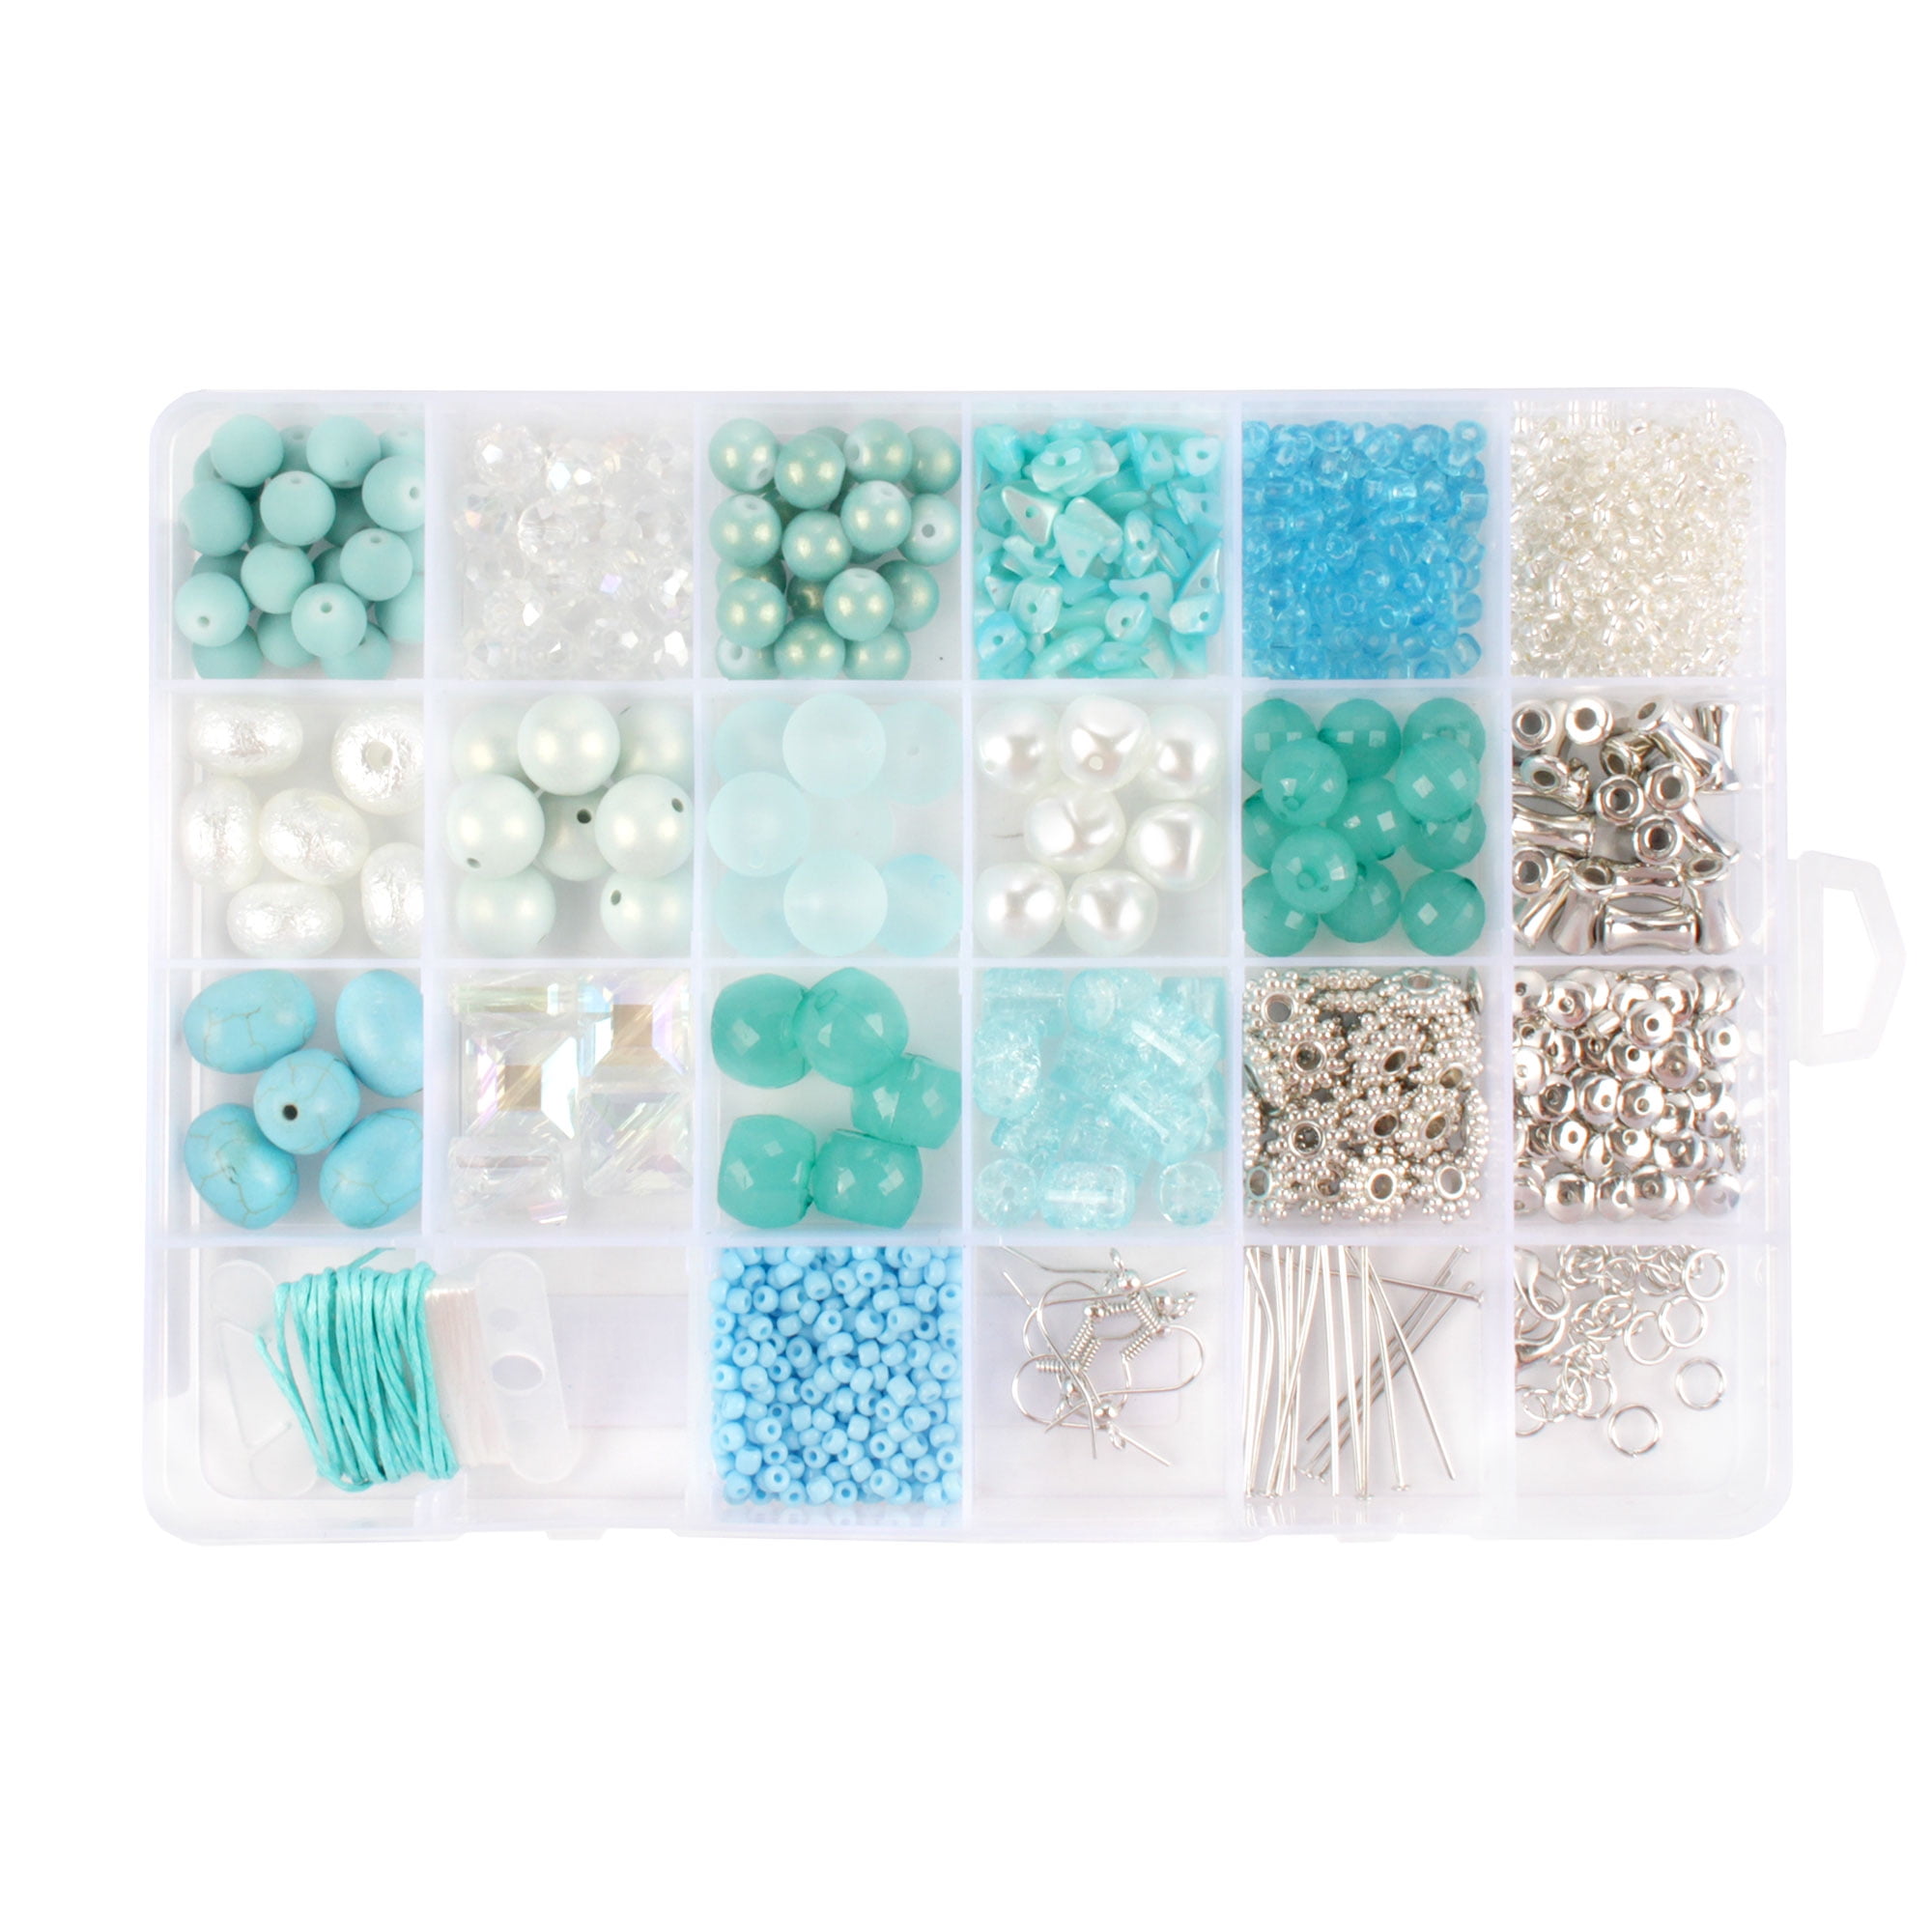 Bead Kits for Jewerly Making - 1300pcs Bead Craft Set - DIY